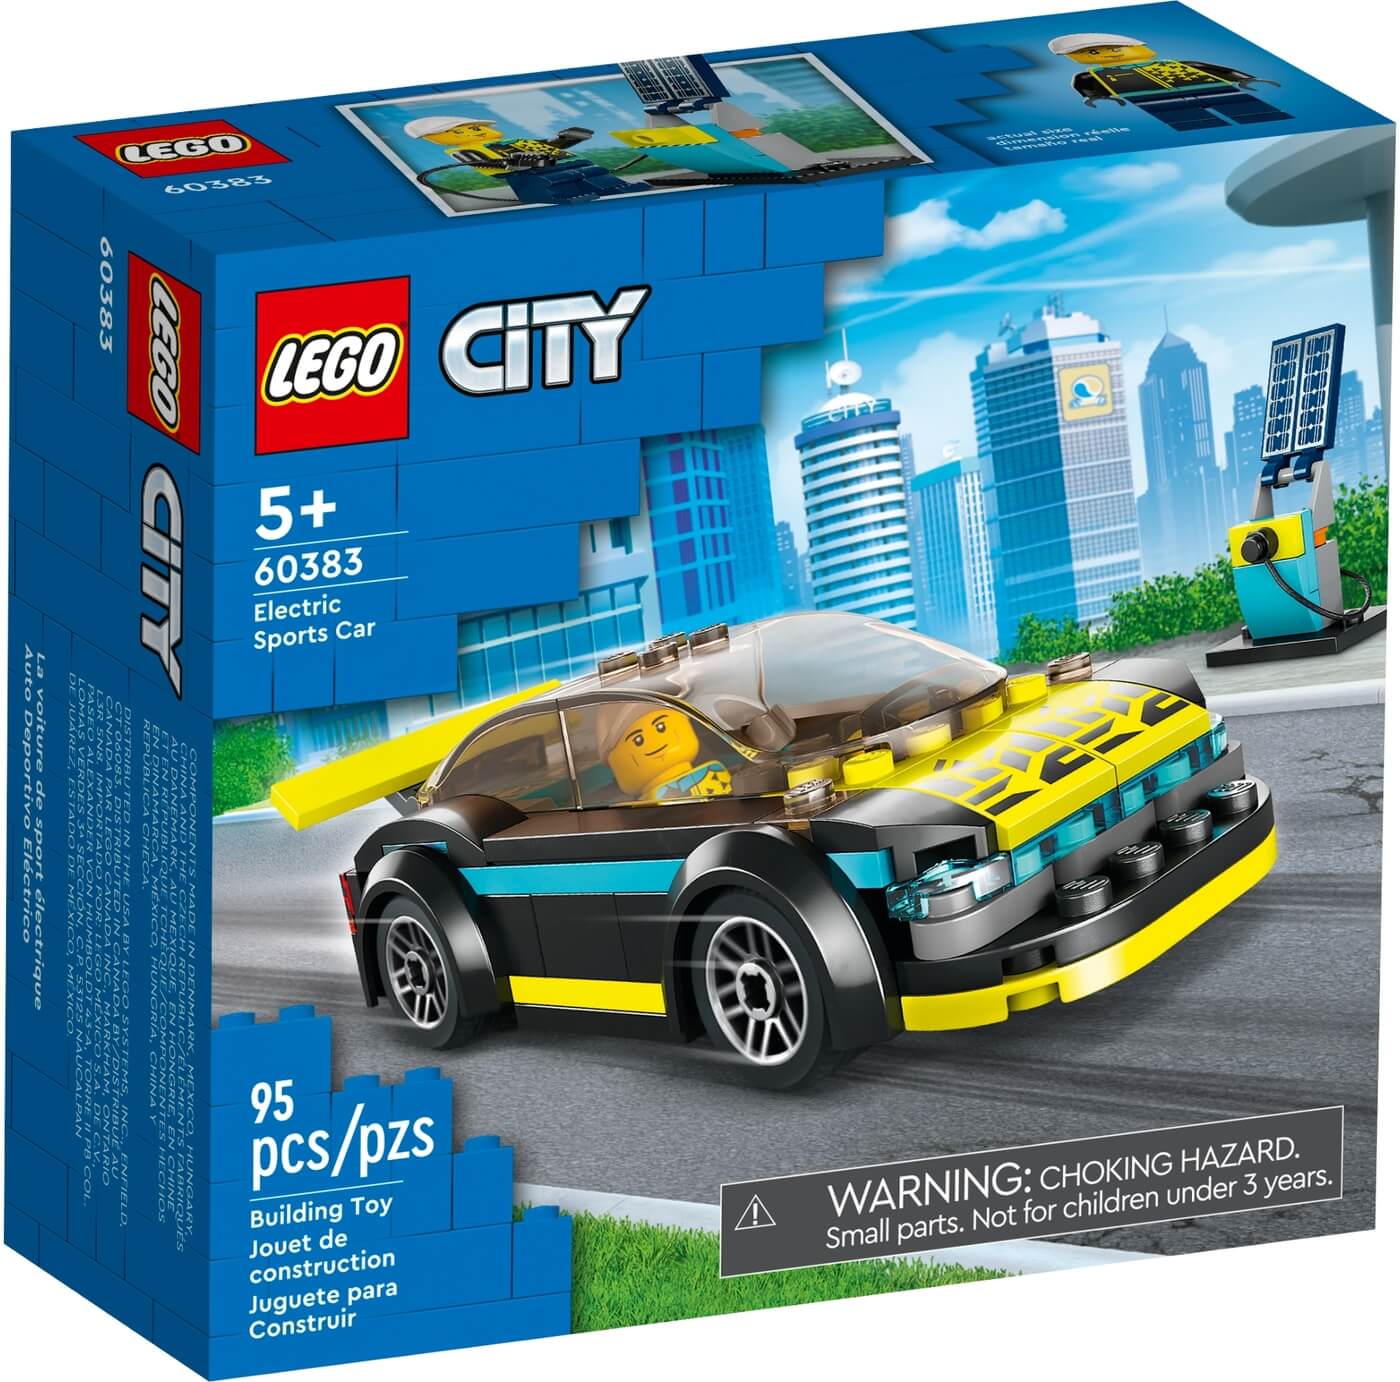 Deportivo Electrico ( Lego 60383 ) imagen f